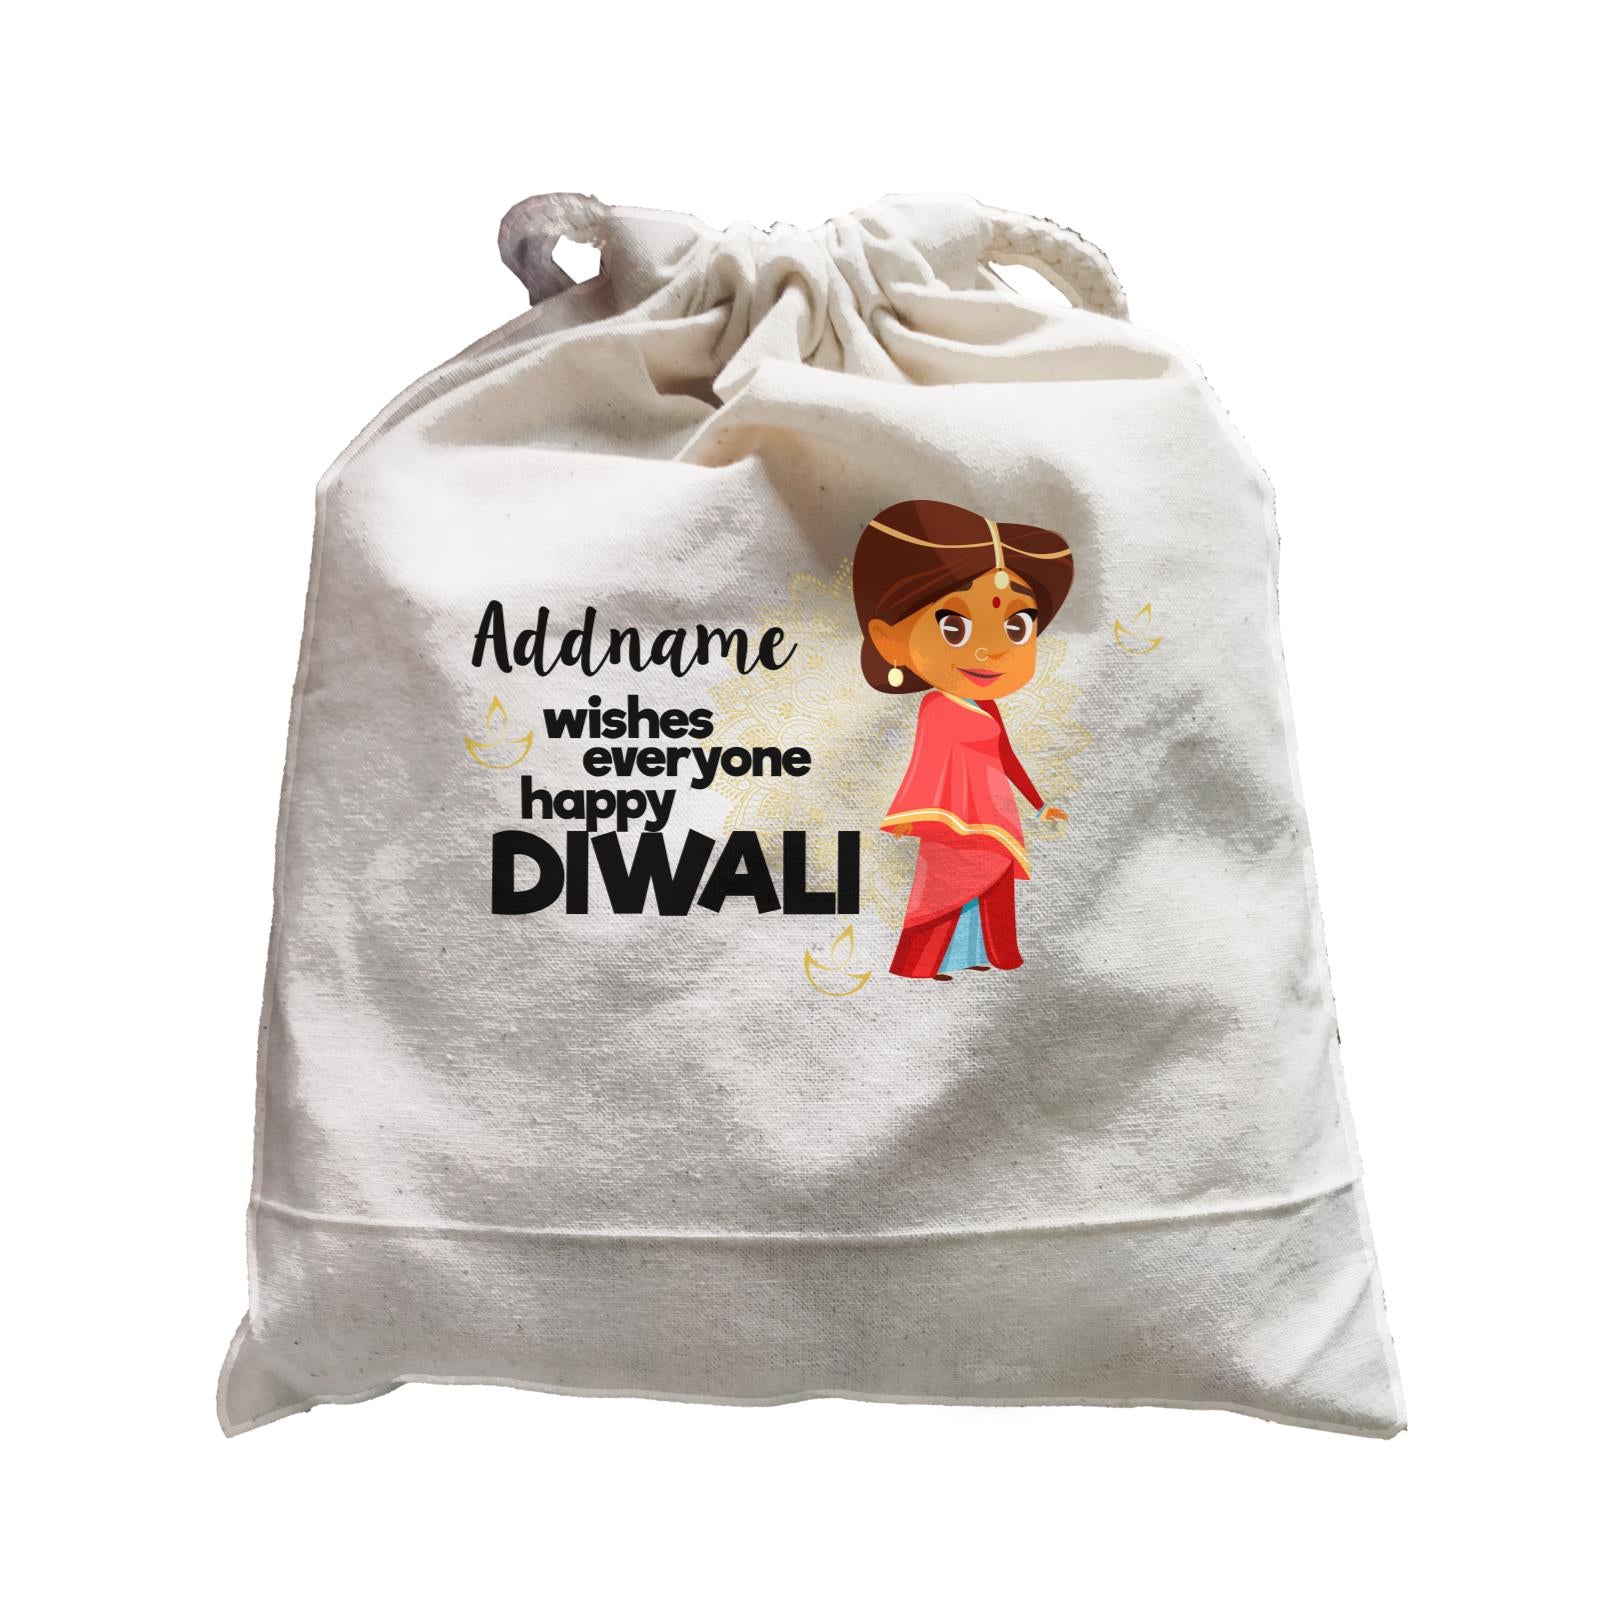 Cute Woman Wishes Everyone Happy Diwali Addname Satchel